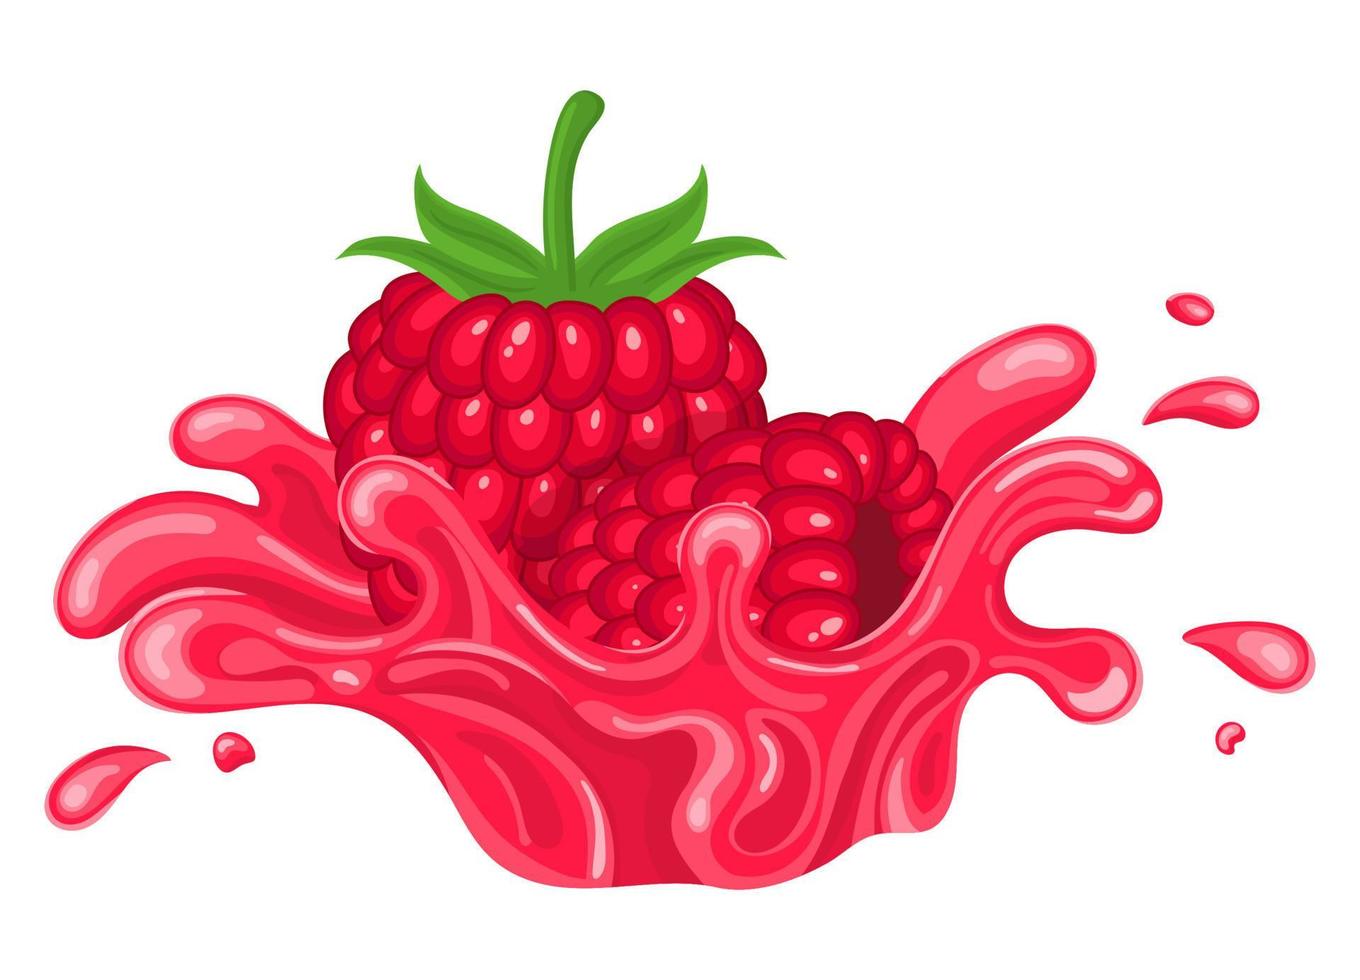 Fresh bright raspberry juice splash burst isolated on white background. Summer fruit juice. Cartoon style. Vector illustration for any design.